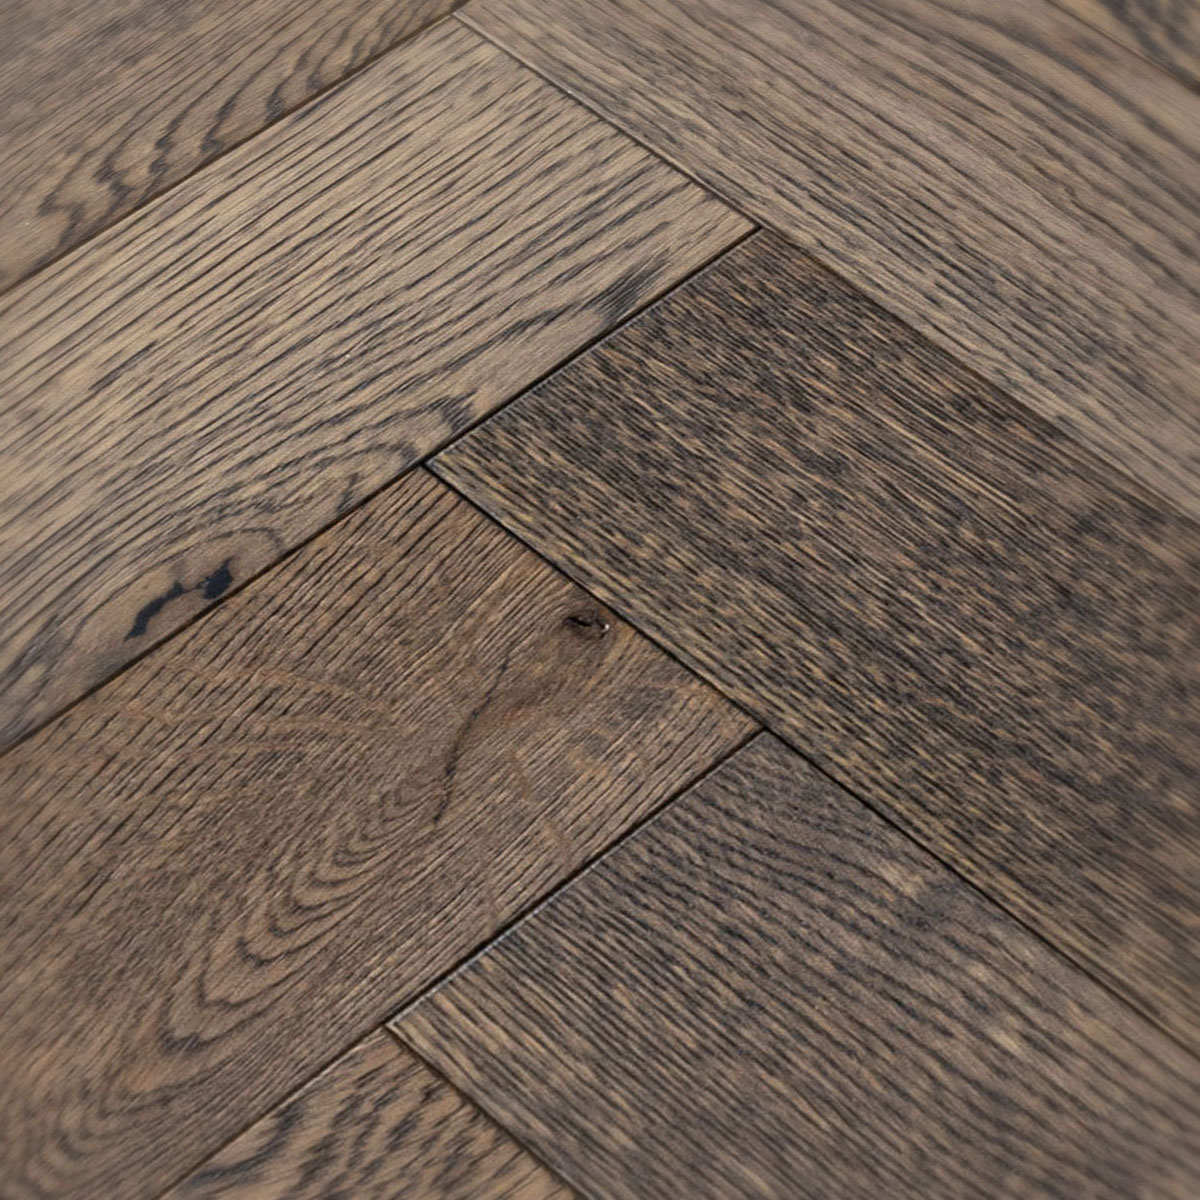 Amberley Grove - Rustic Grade Parquet European Oak Floor